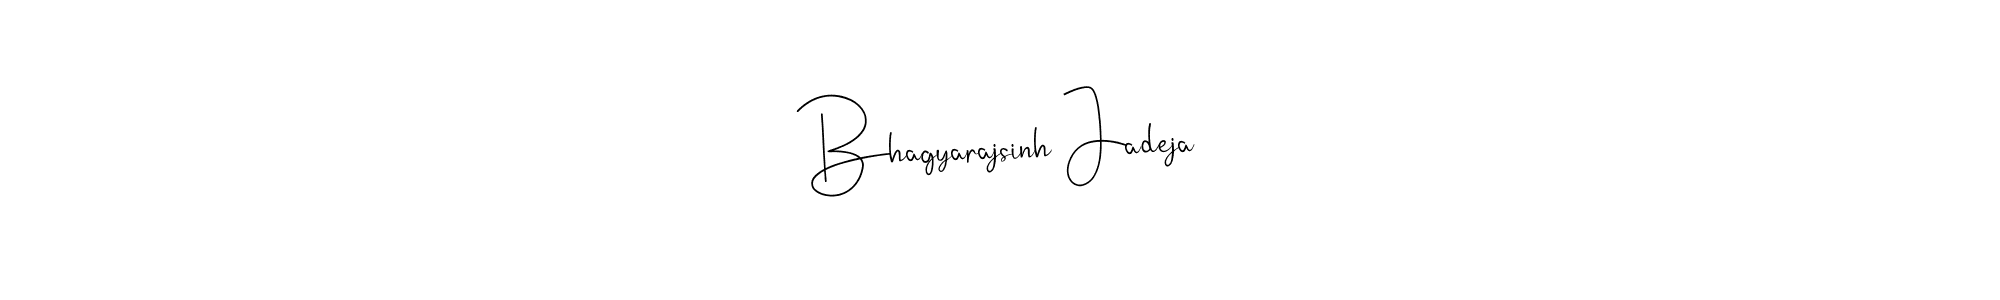 How to Draw Bhagyarajsinh Jadeja signature style? Andilay-7BmLP is a latest design signature styles for name Bhagyarajsinh Jadeja. Bhagyarajsinh Jadeja signature style 4 images and pictures png